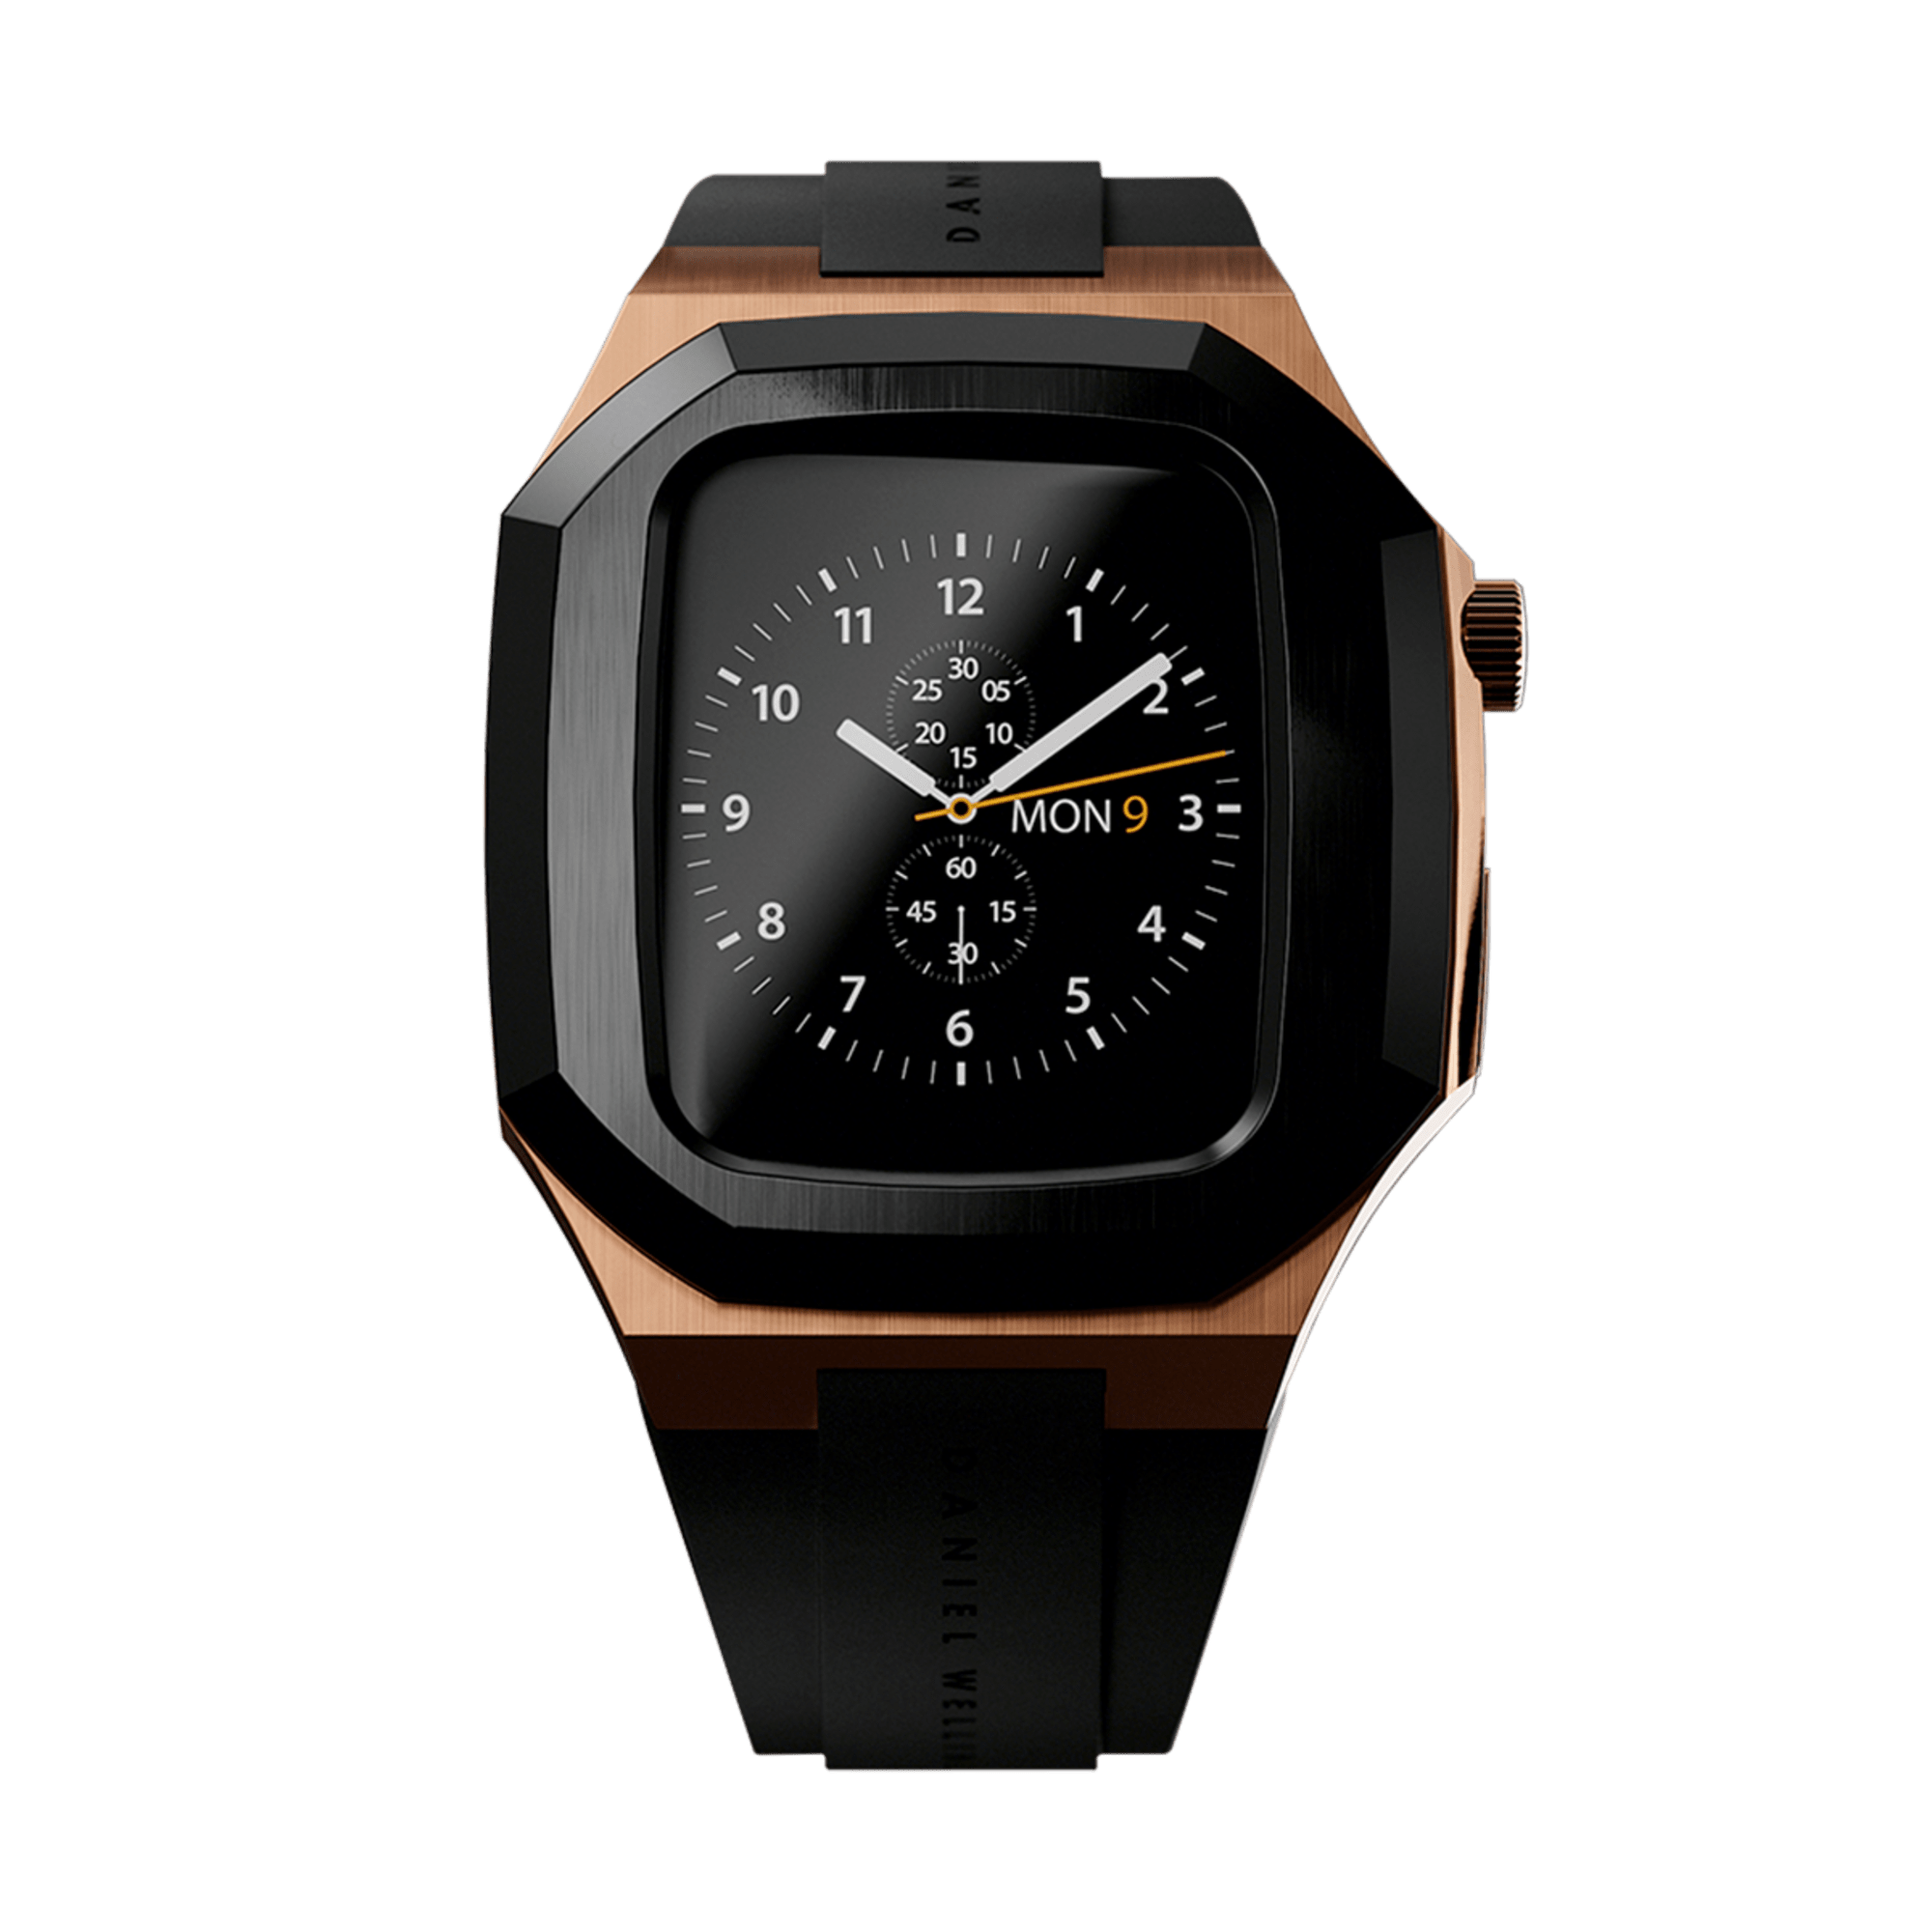 Buy Hello 3 Smart Watch at Best Price in Sri Lanka